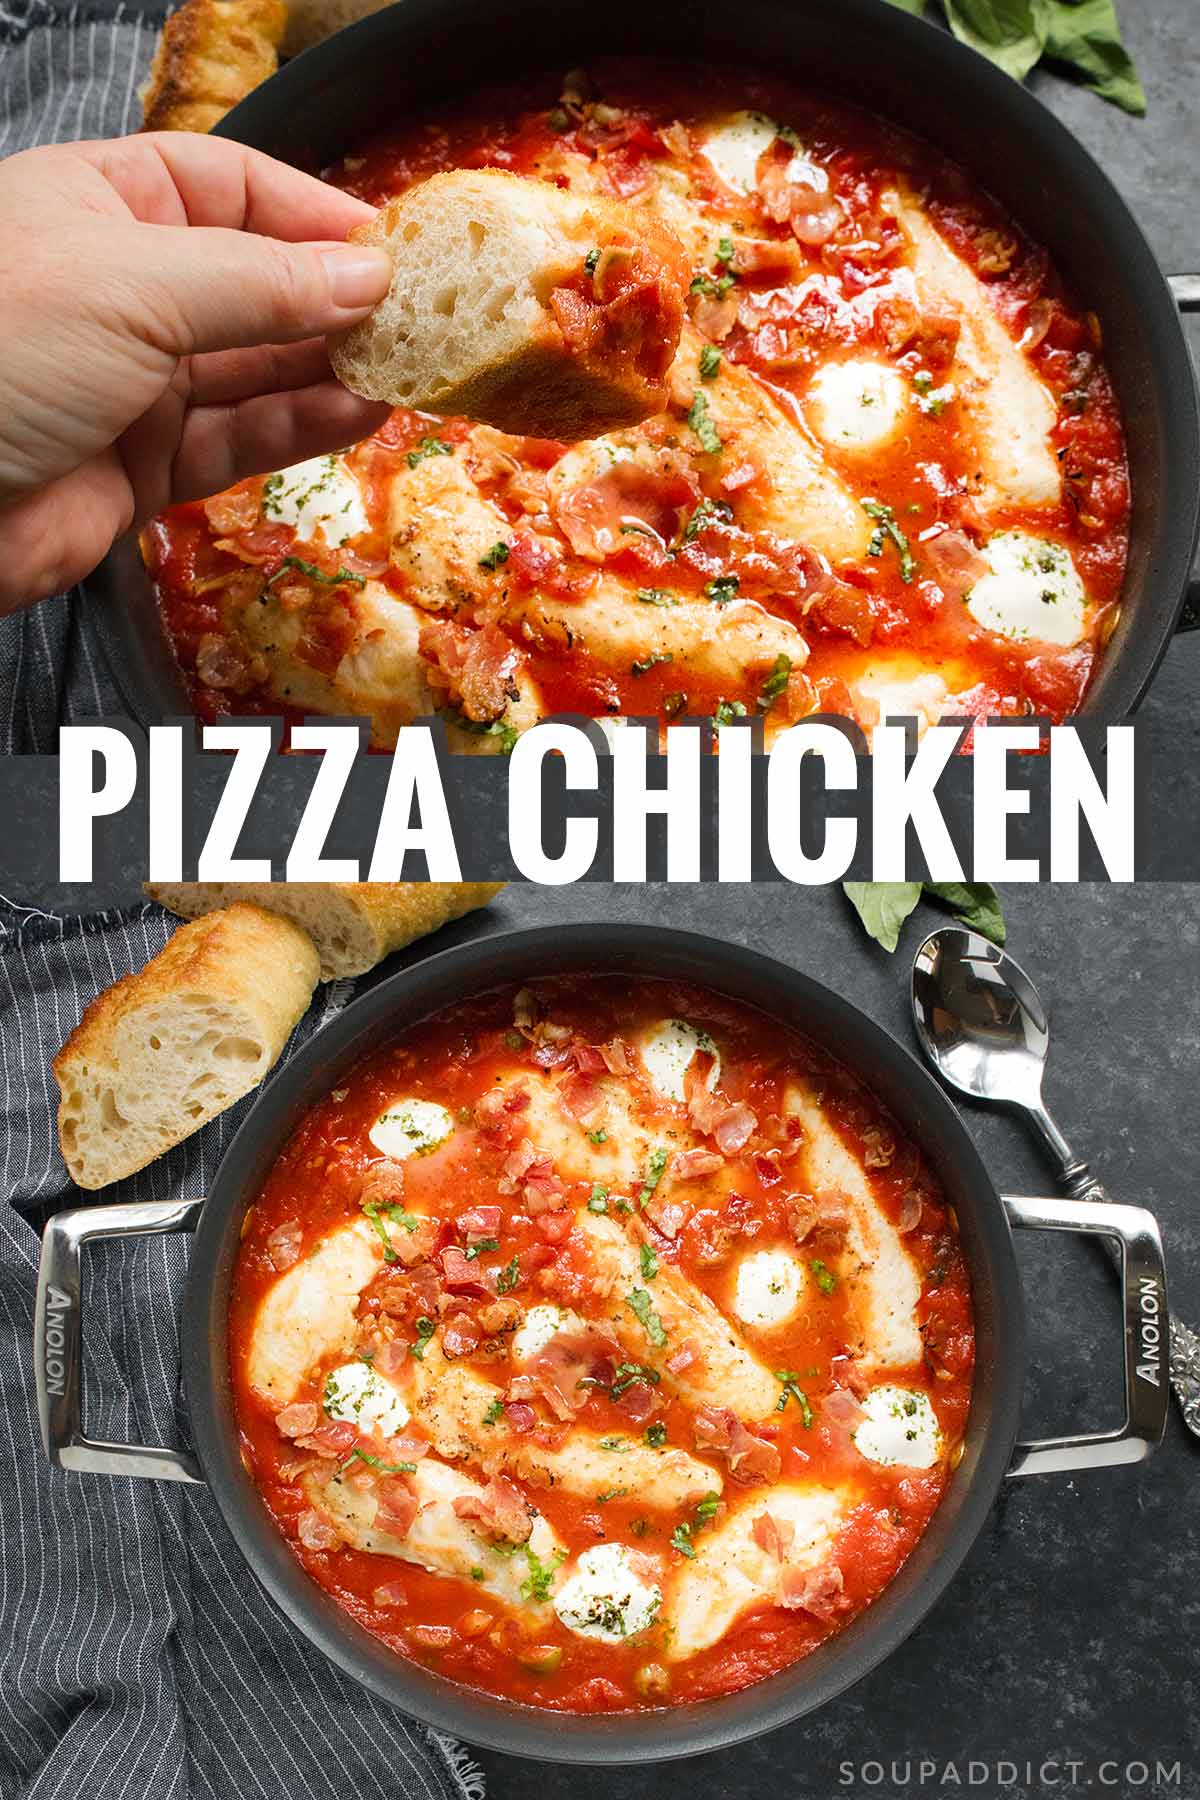 Pizza Chicken - Recipe at SoupAddict.com | #pizza #chicken #oneskilletmeal